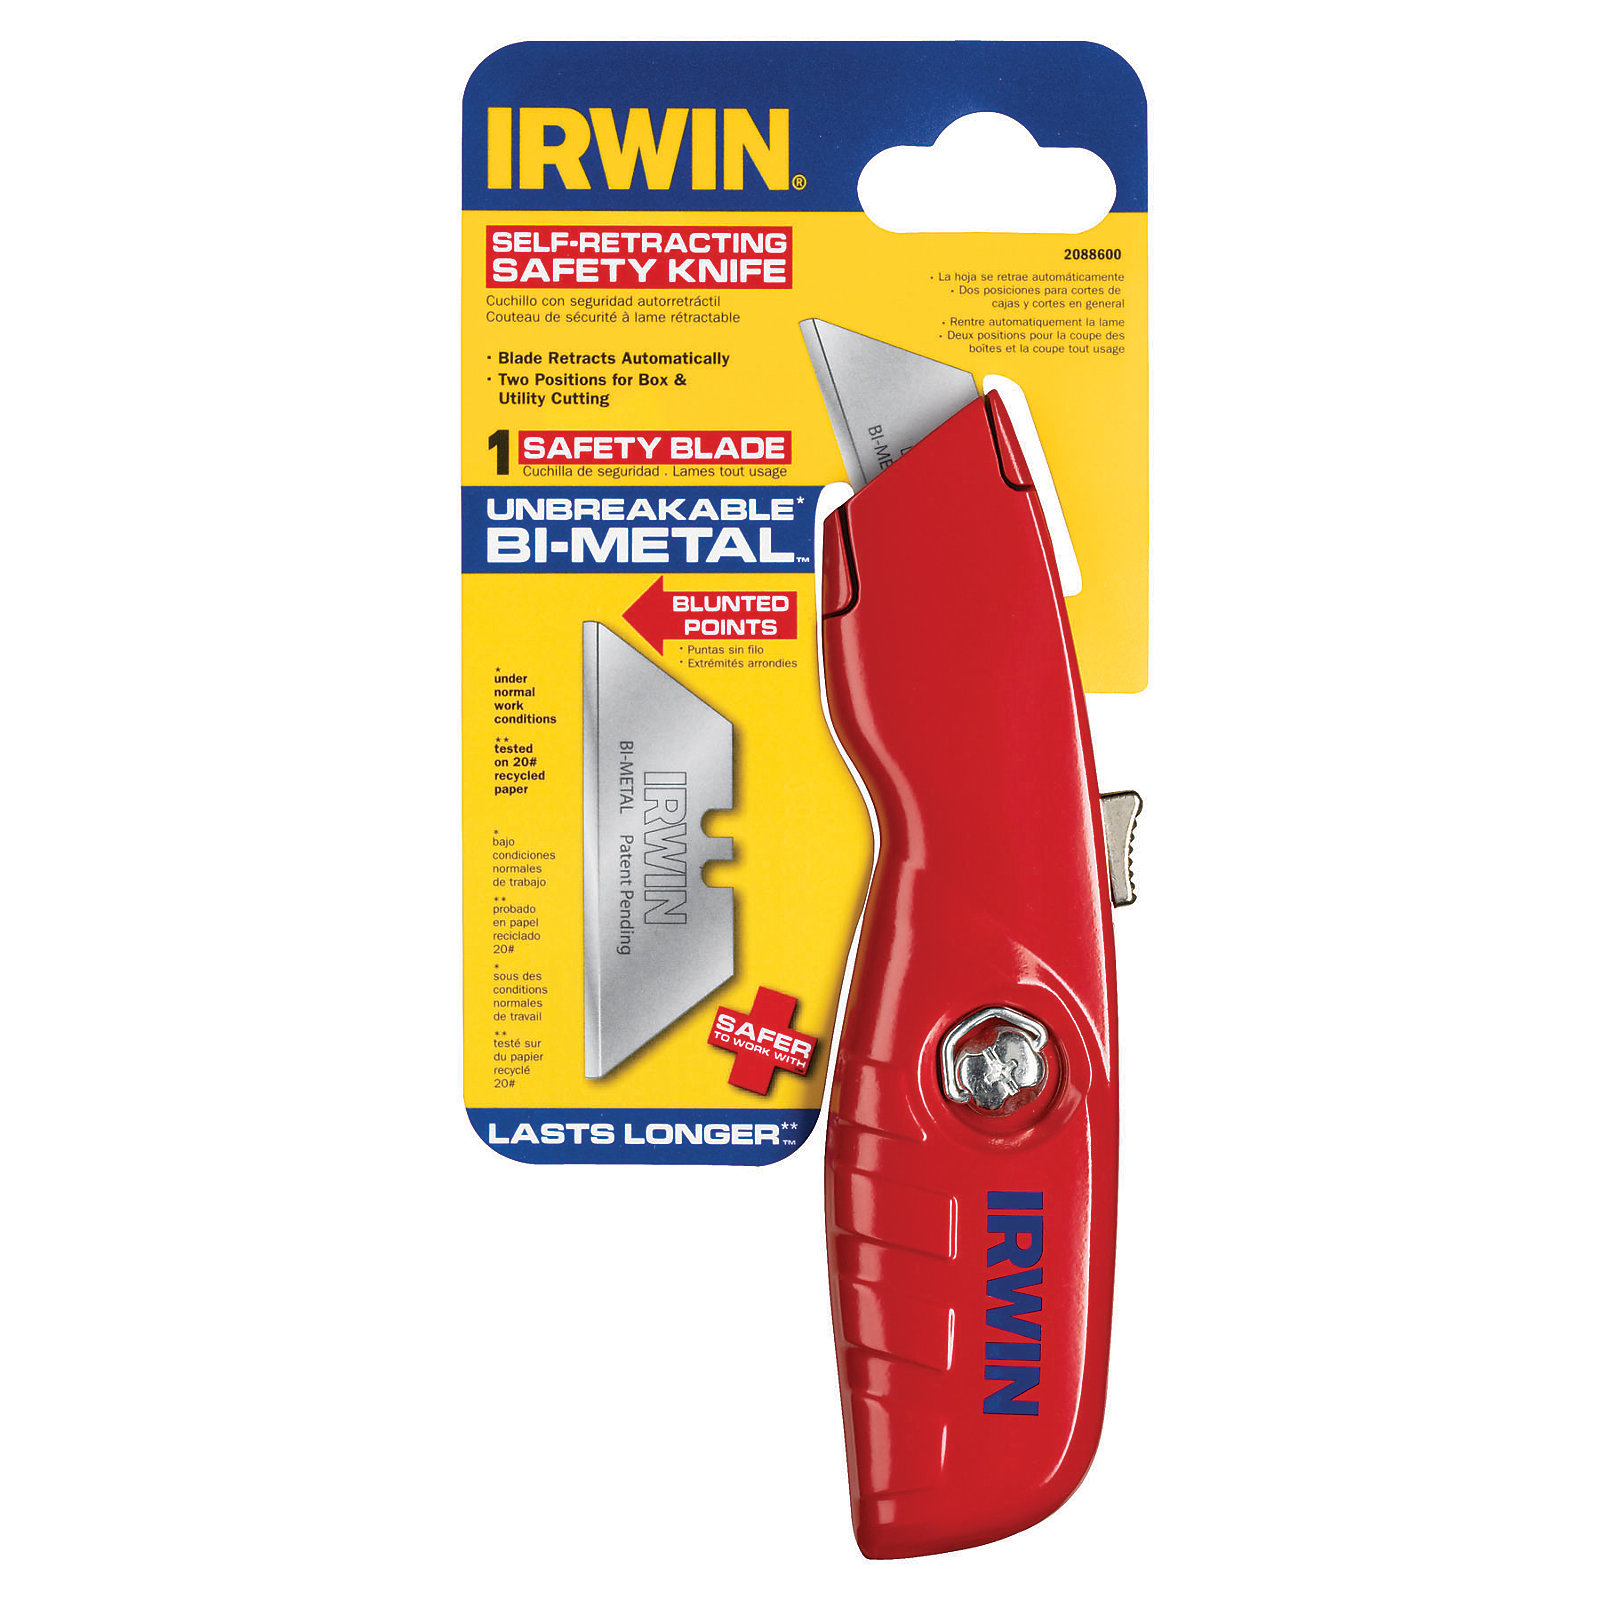 Irwin Self-Retracting Safety Utility Knife (2088600)